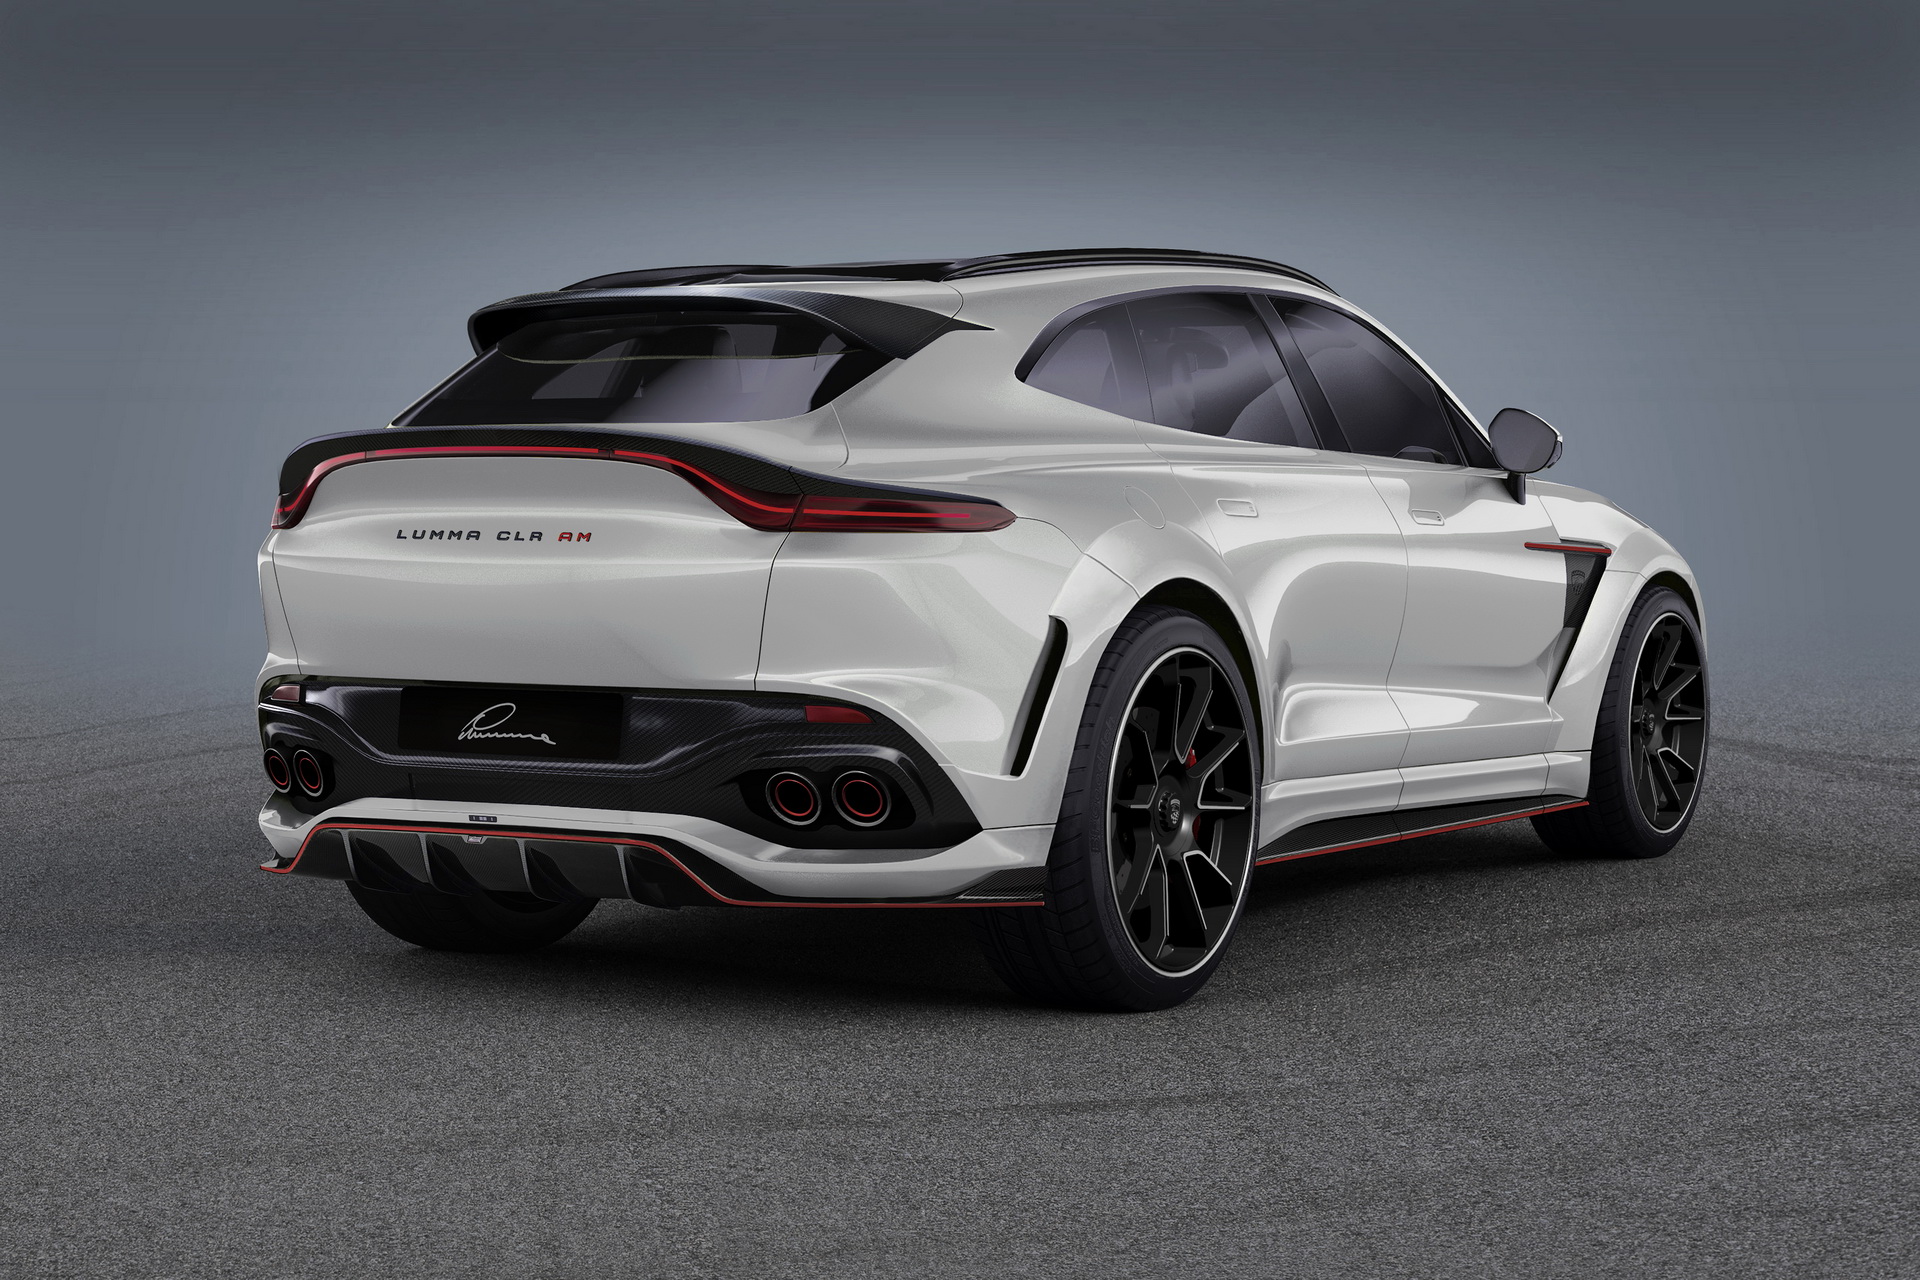 Lumma Design Rancang Body Kit Yang Sangar Untuk Aston Martin Dbx